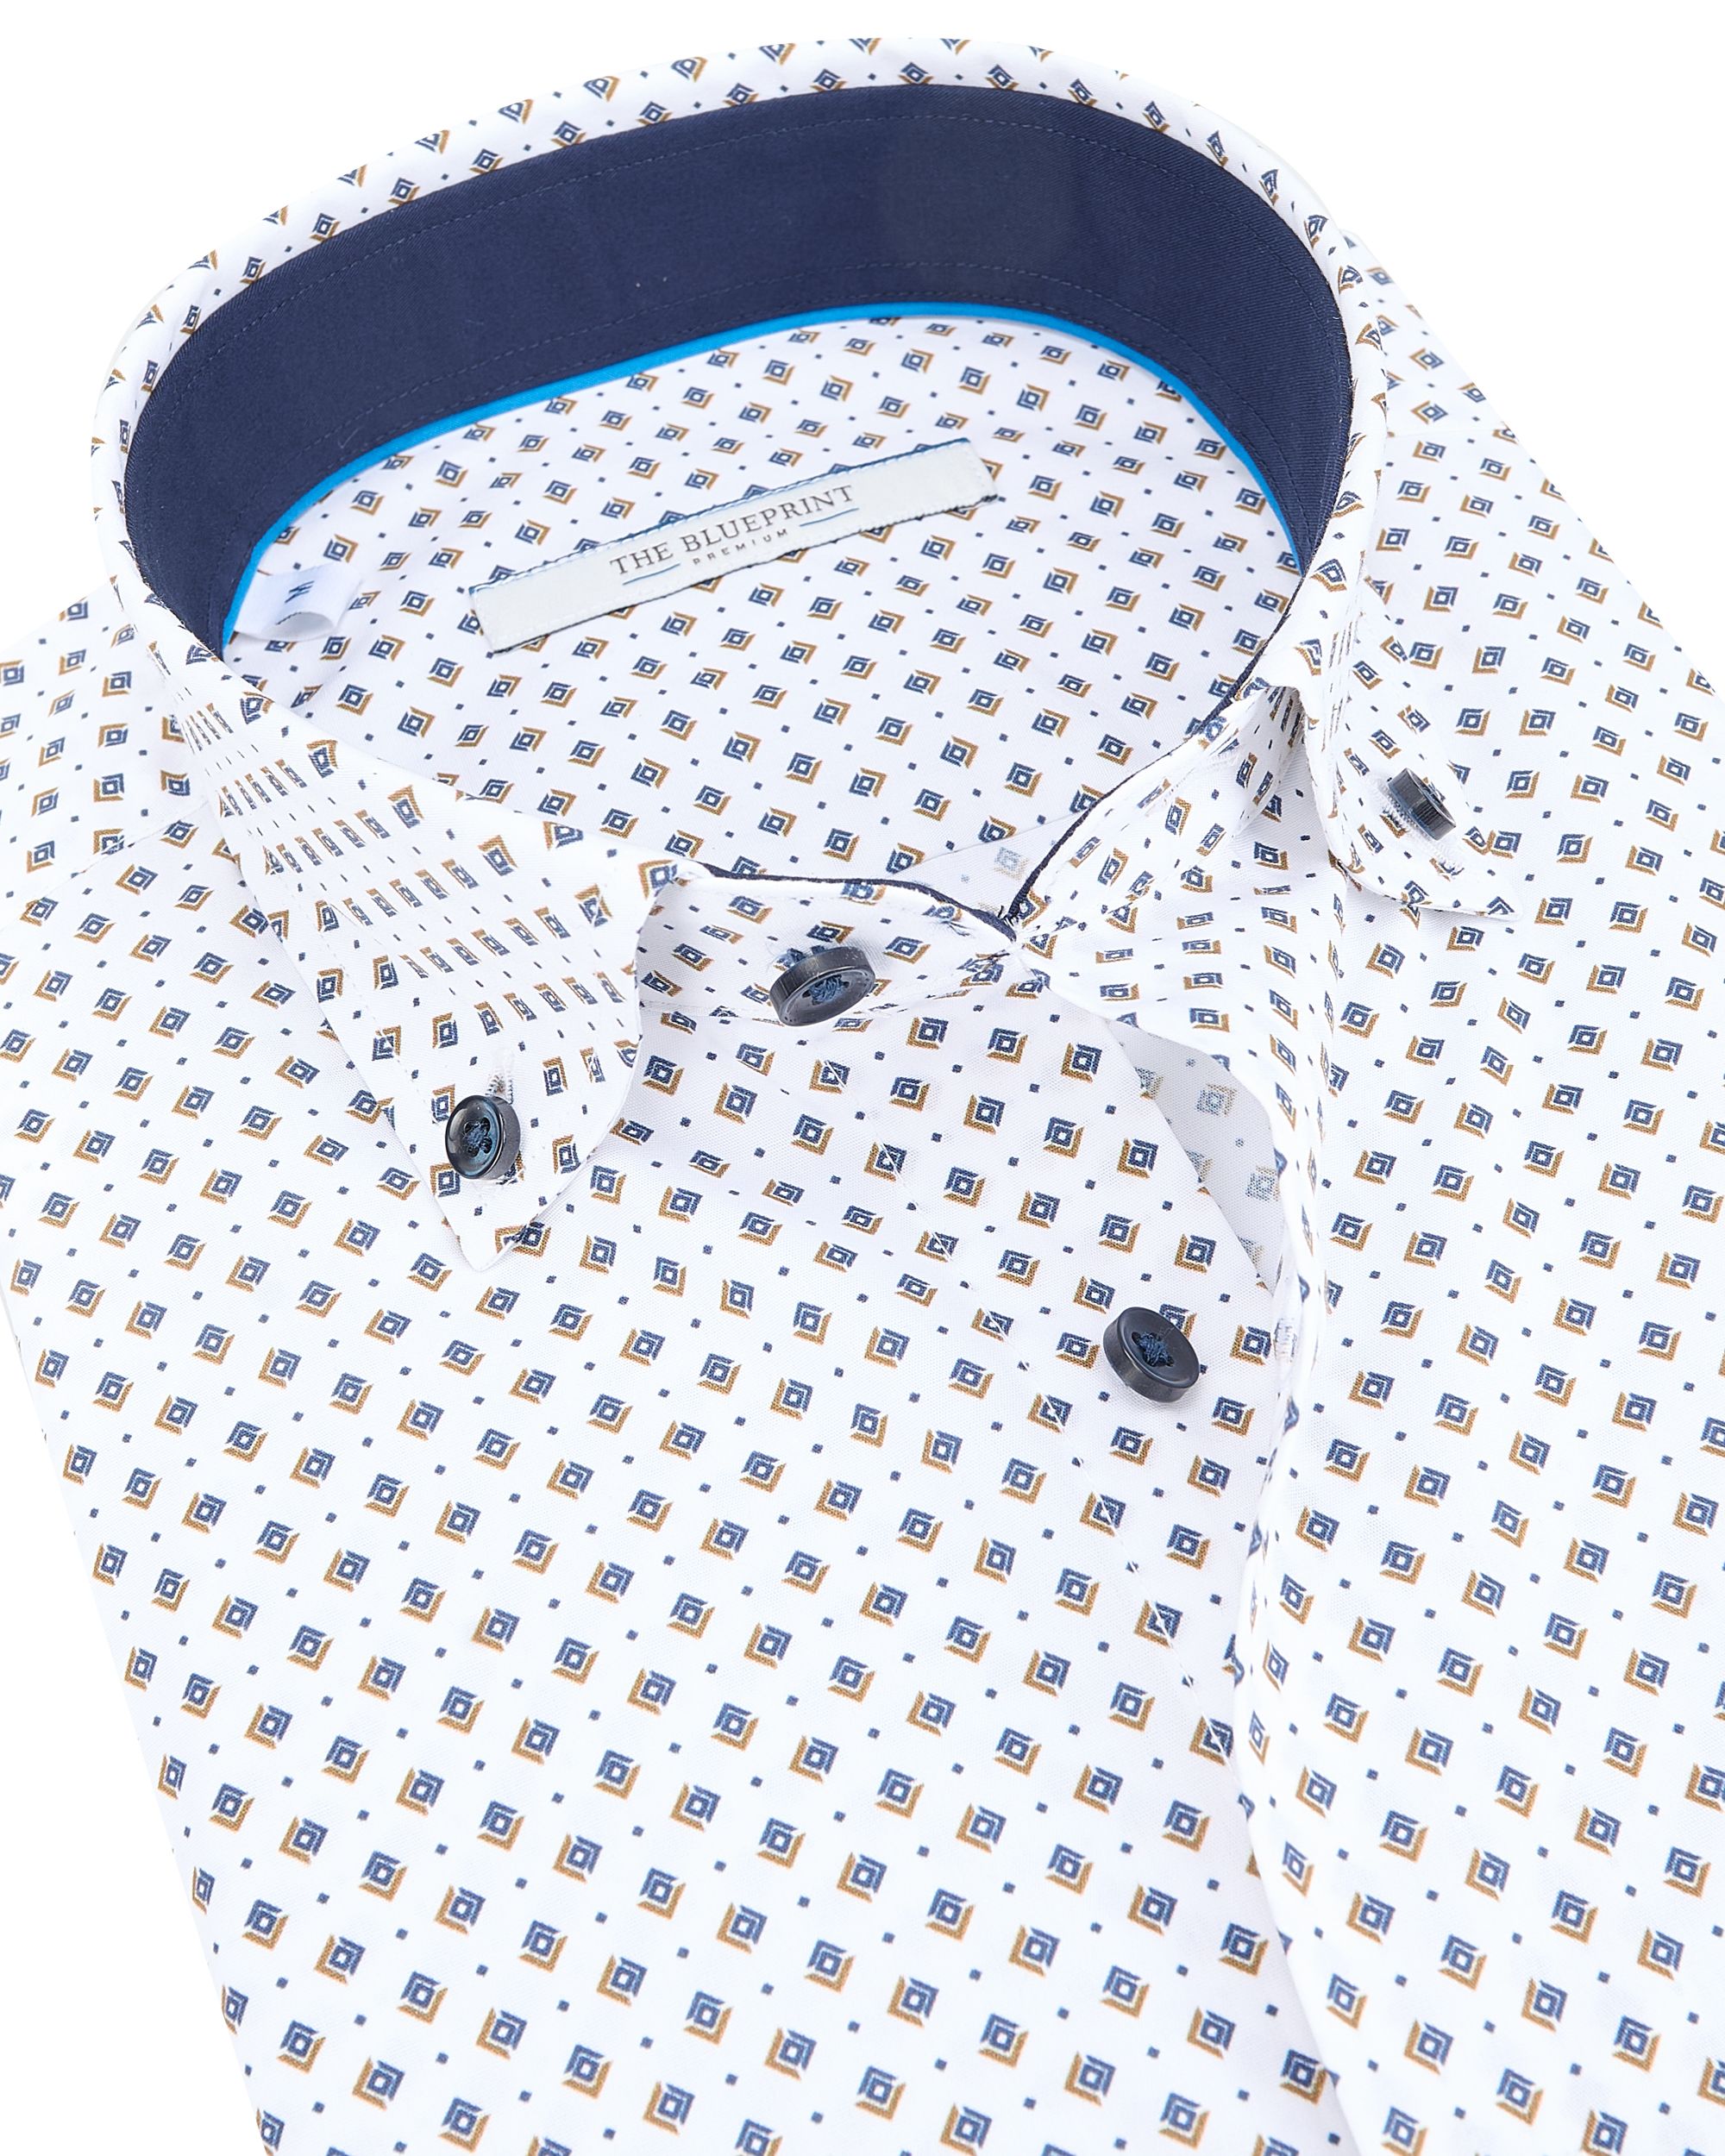 The BLUEPRINT Premium - Trendy Overhemd LM Wit dessin 092078-001-L